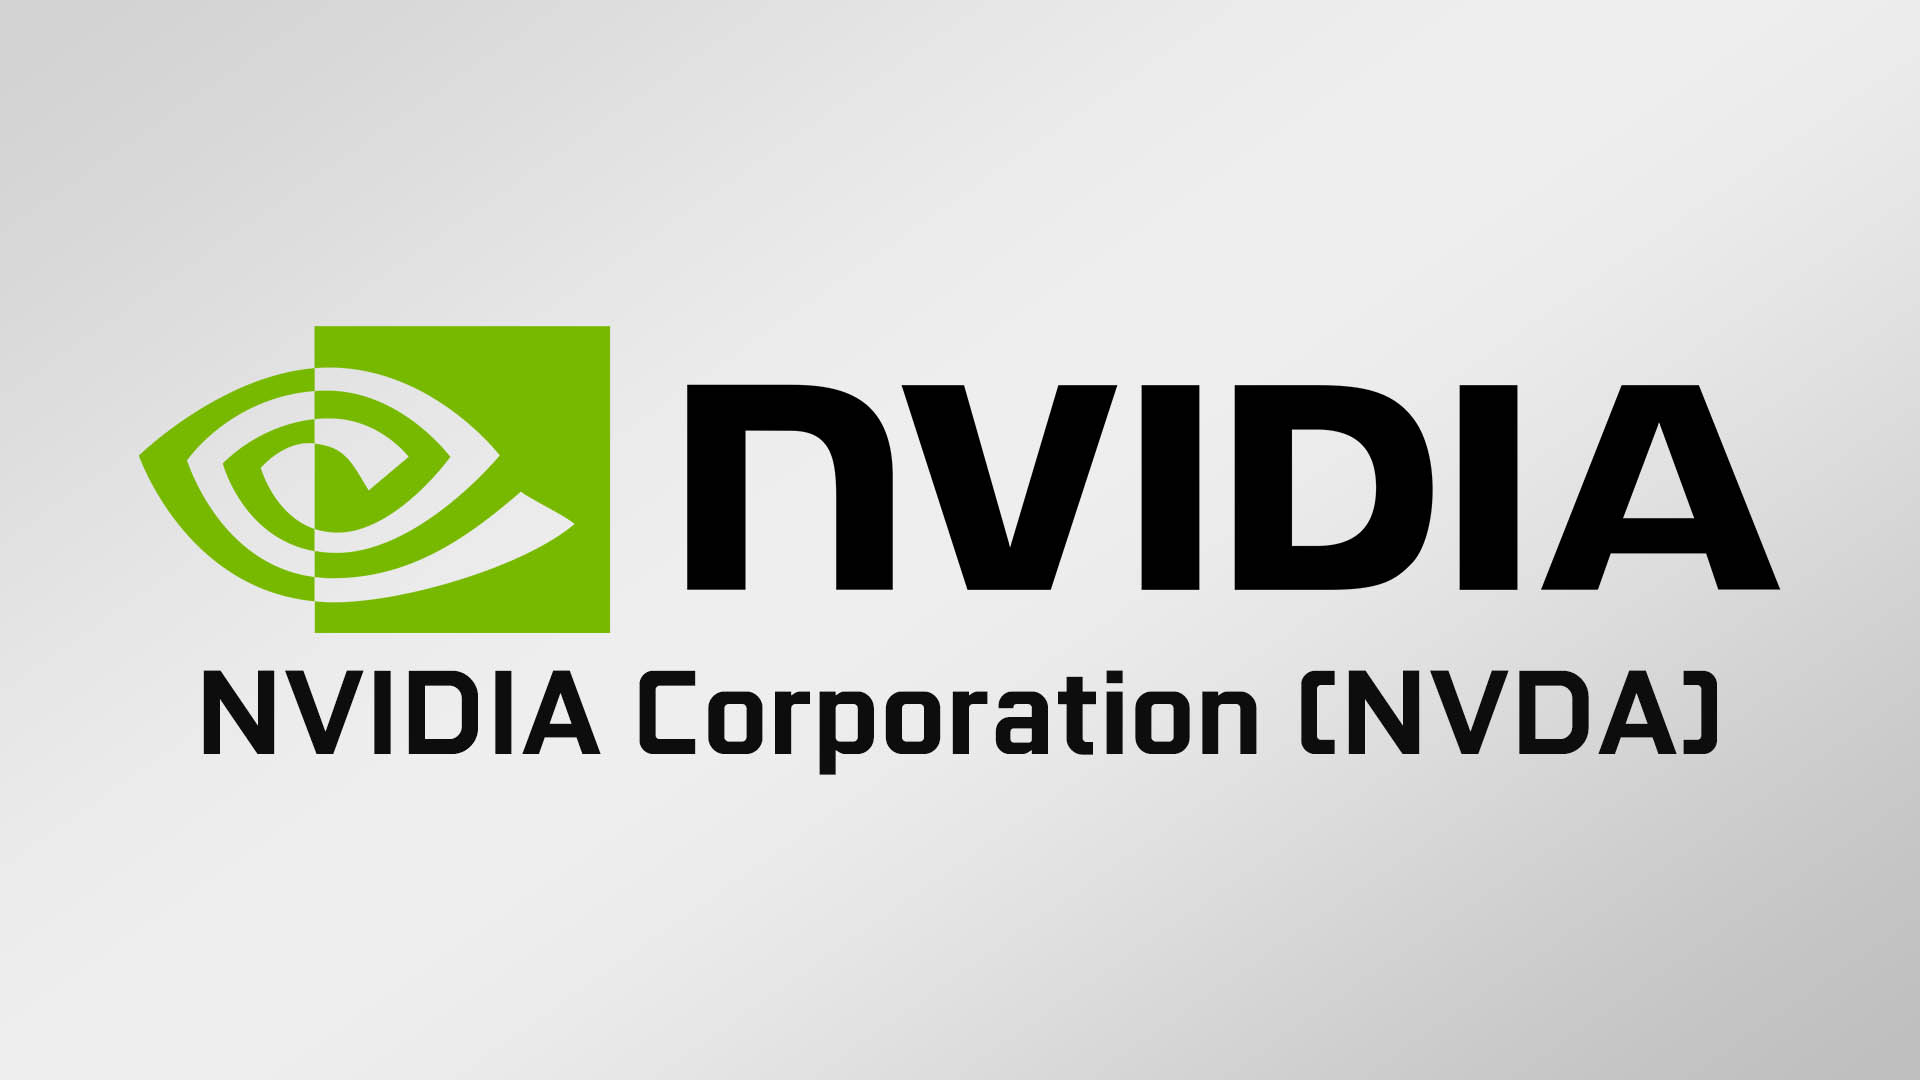 NVIDIAが採用活動を抑制へ。インフレによる景気後退を懸念？